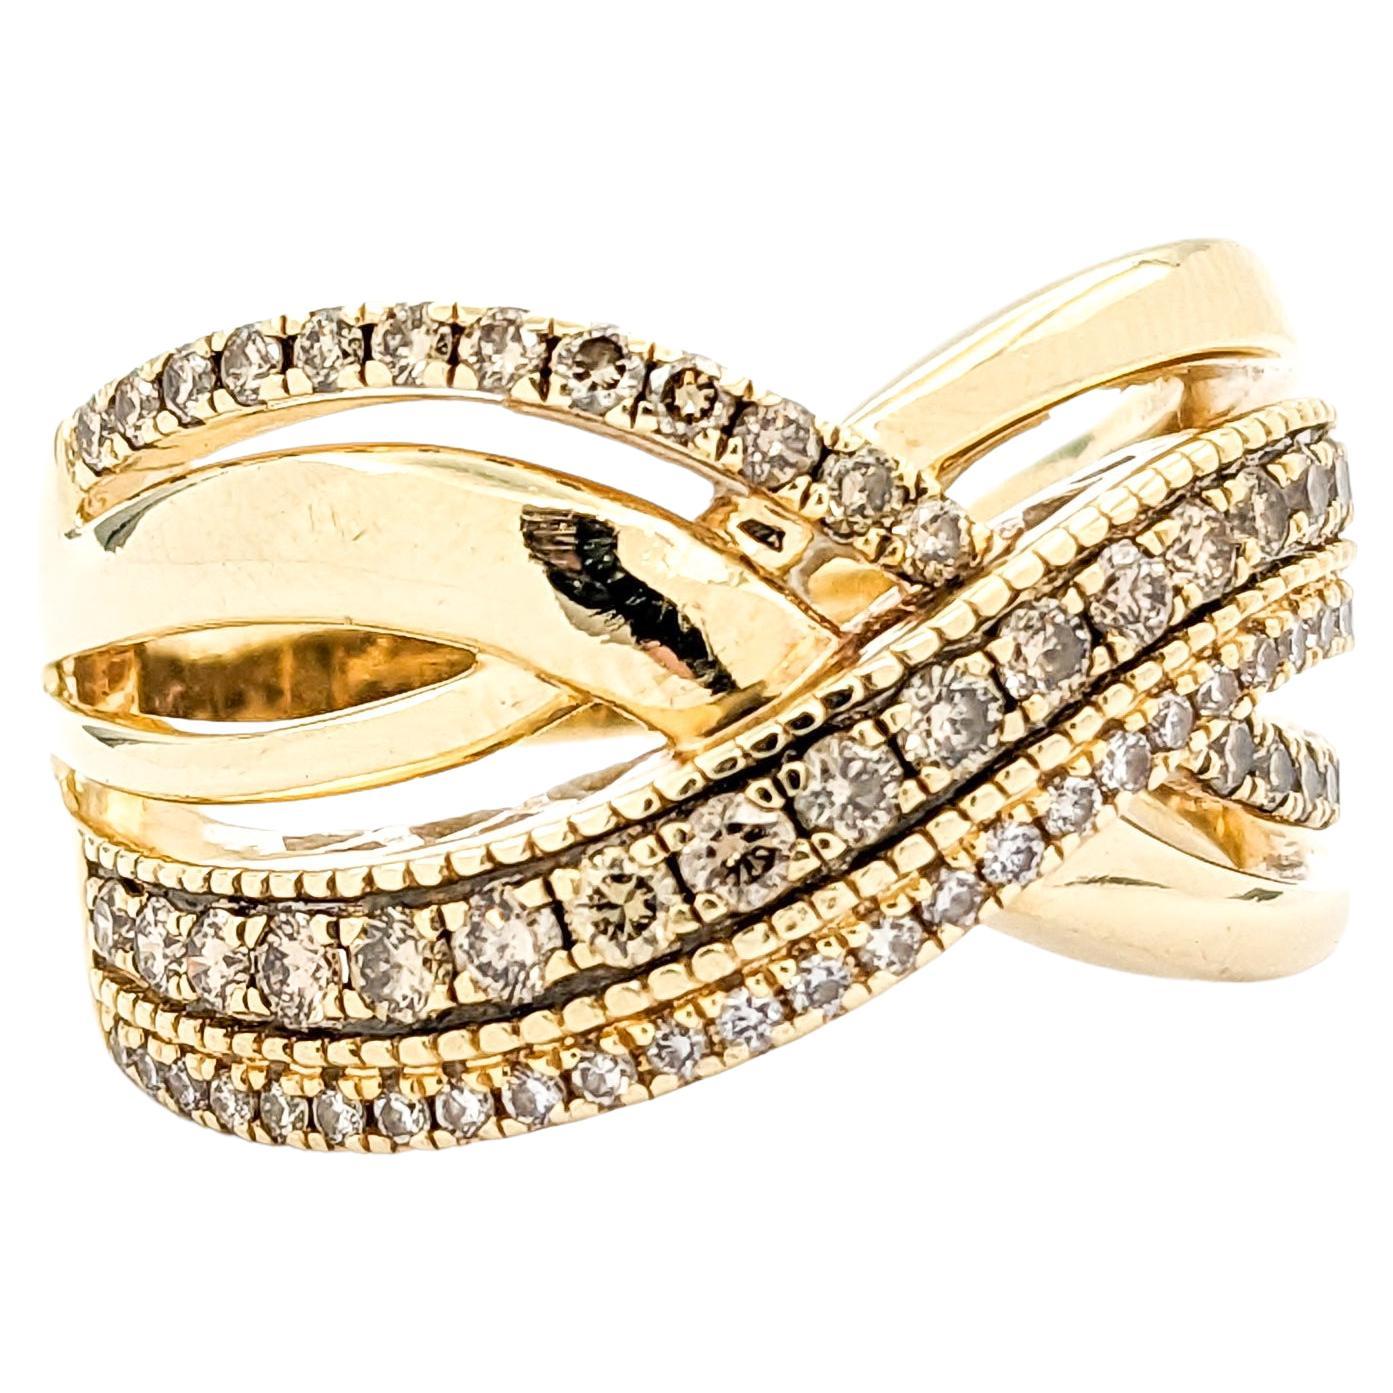 1ctw Diamond Ring In Yellow Gold